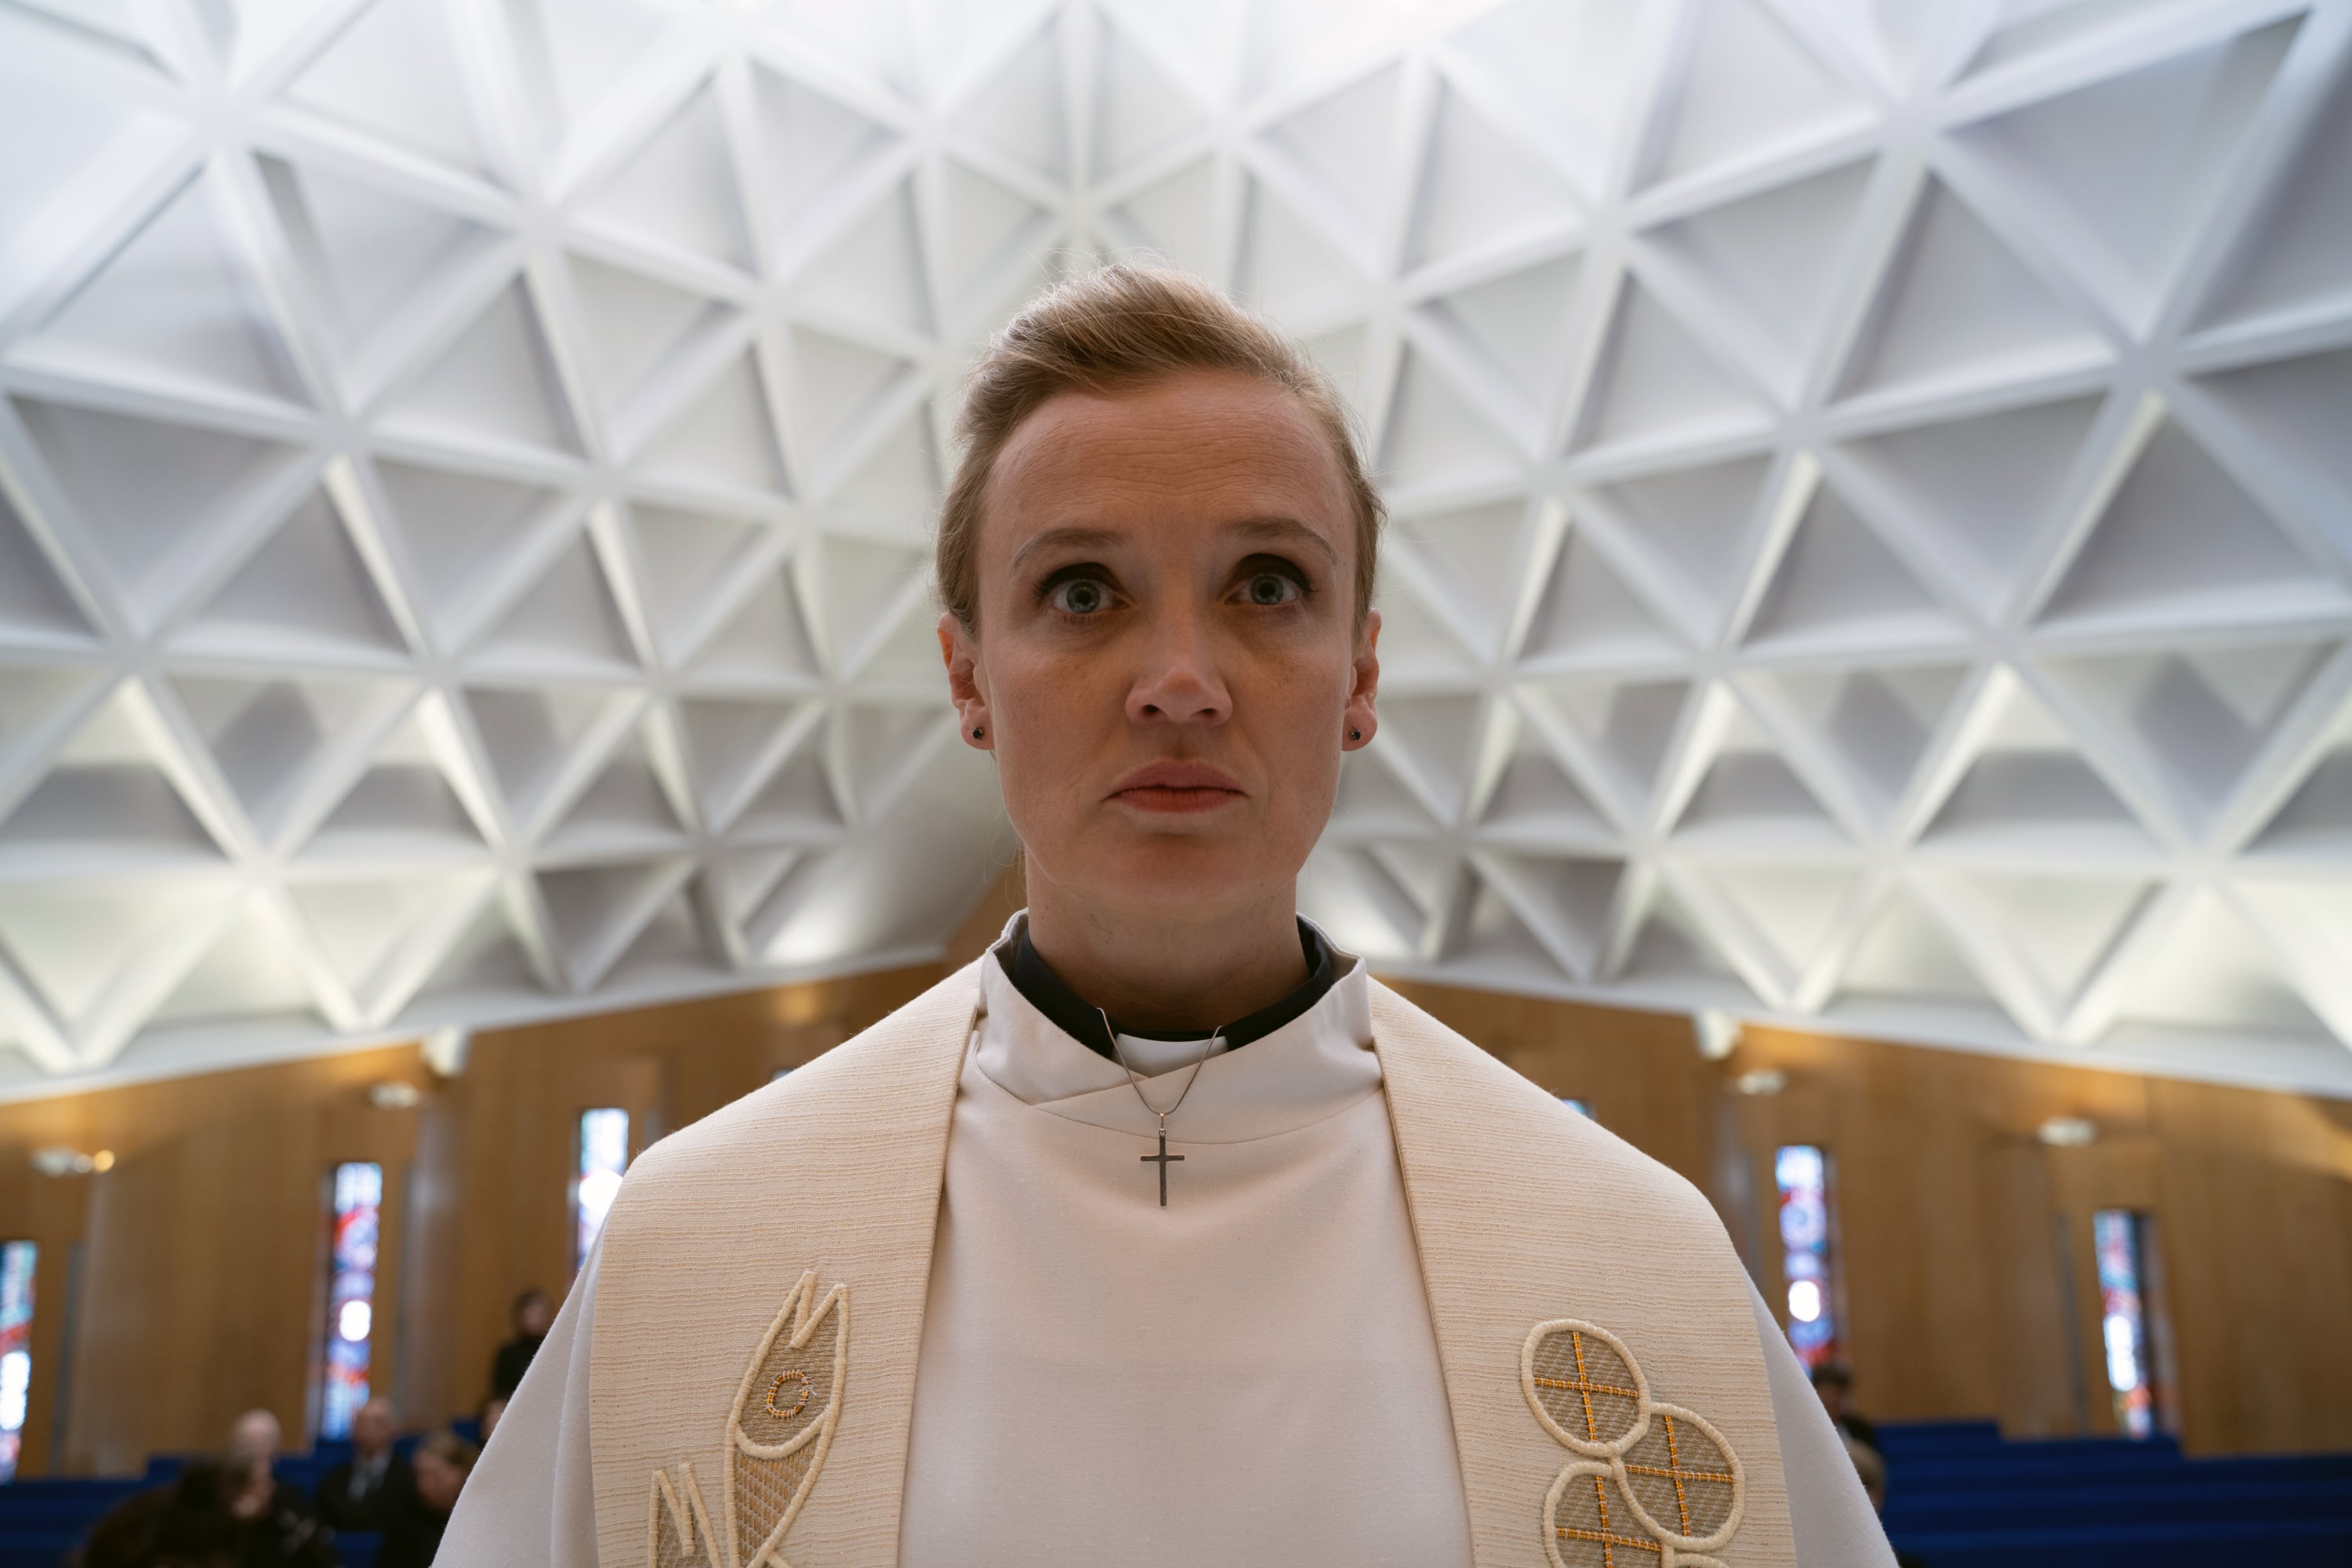 Lilja Nótt as Elísabet in the award winning Sisterhood series